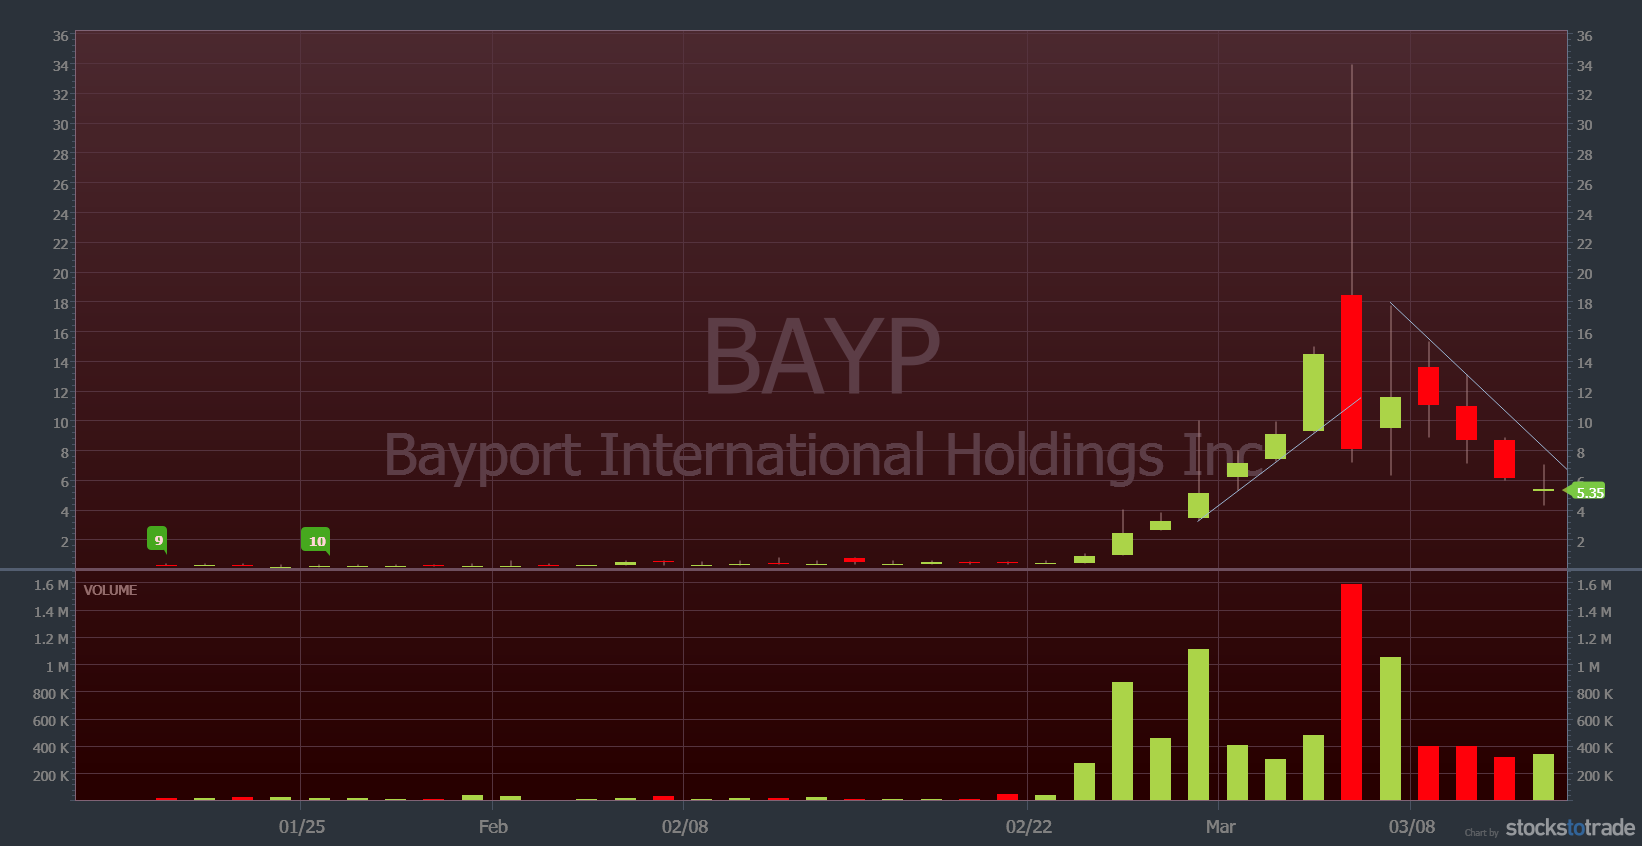 stock trend analysis bayp